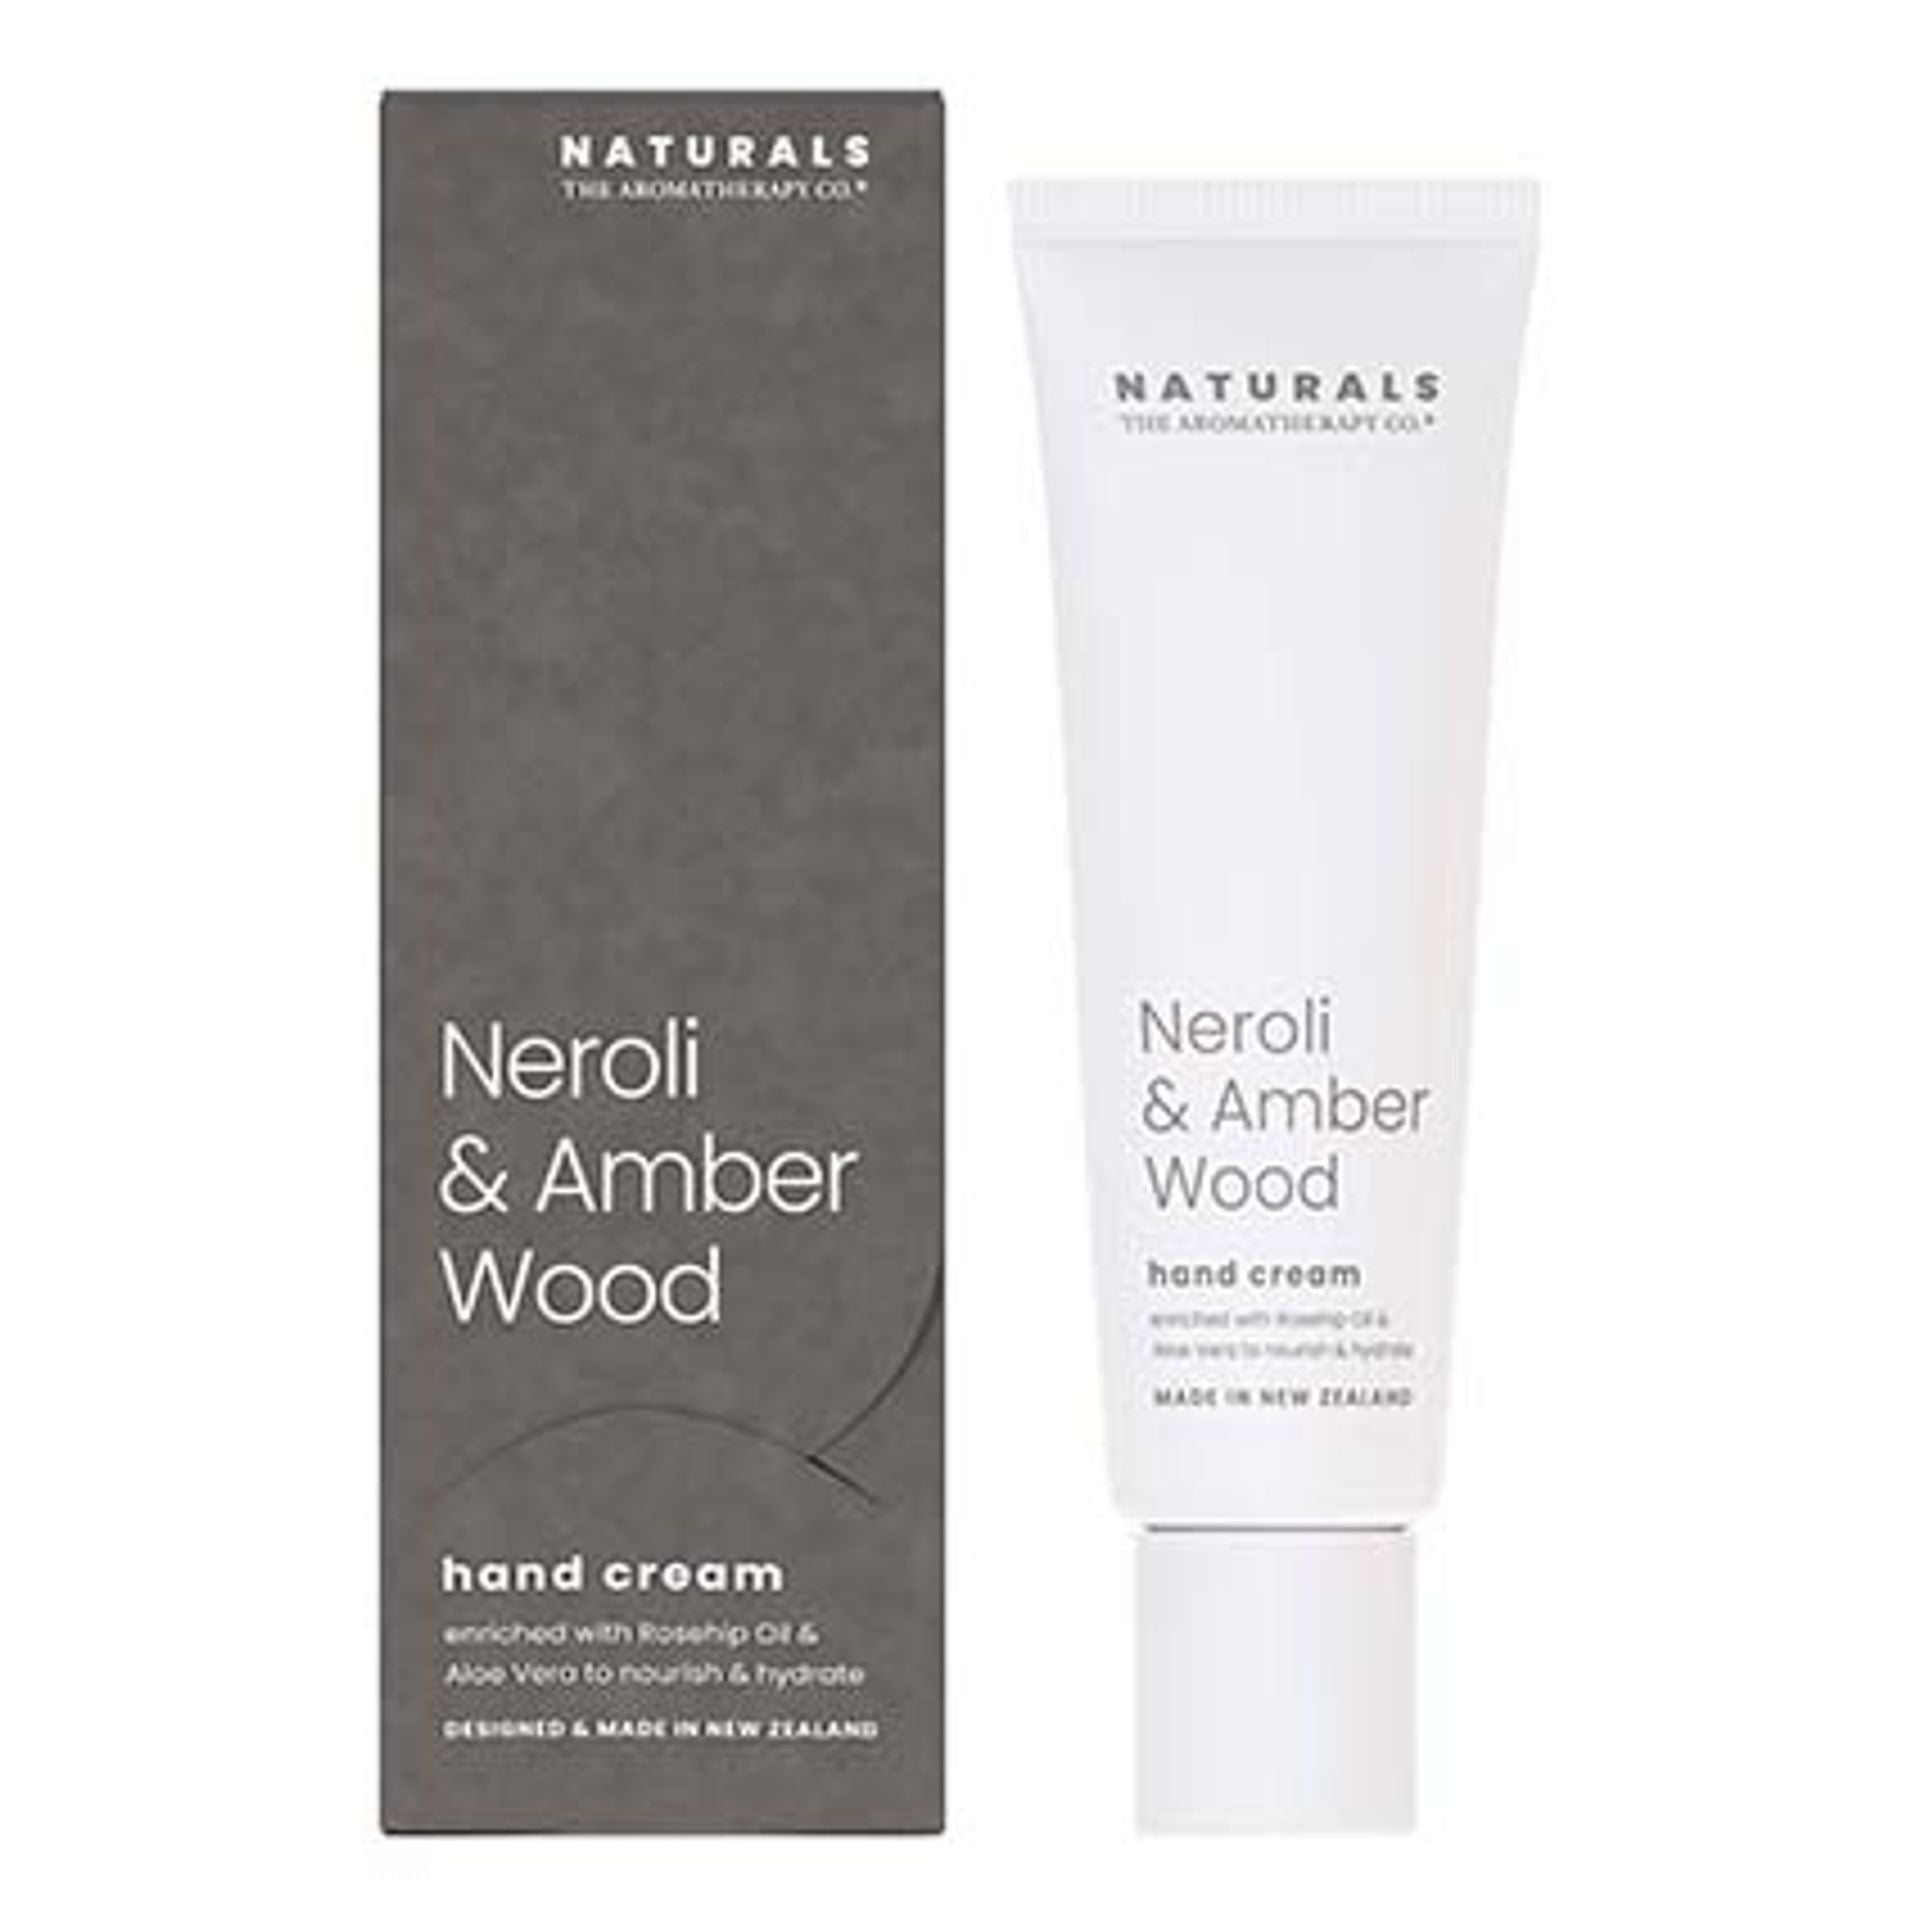 The Aromatherapy Co Naturals Neroli & Amber Wood Hand Cream